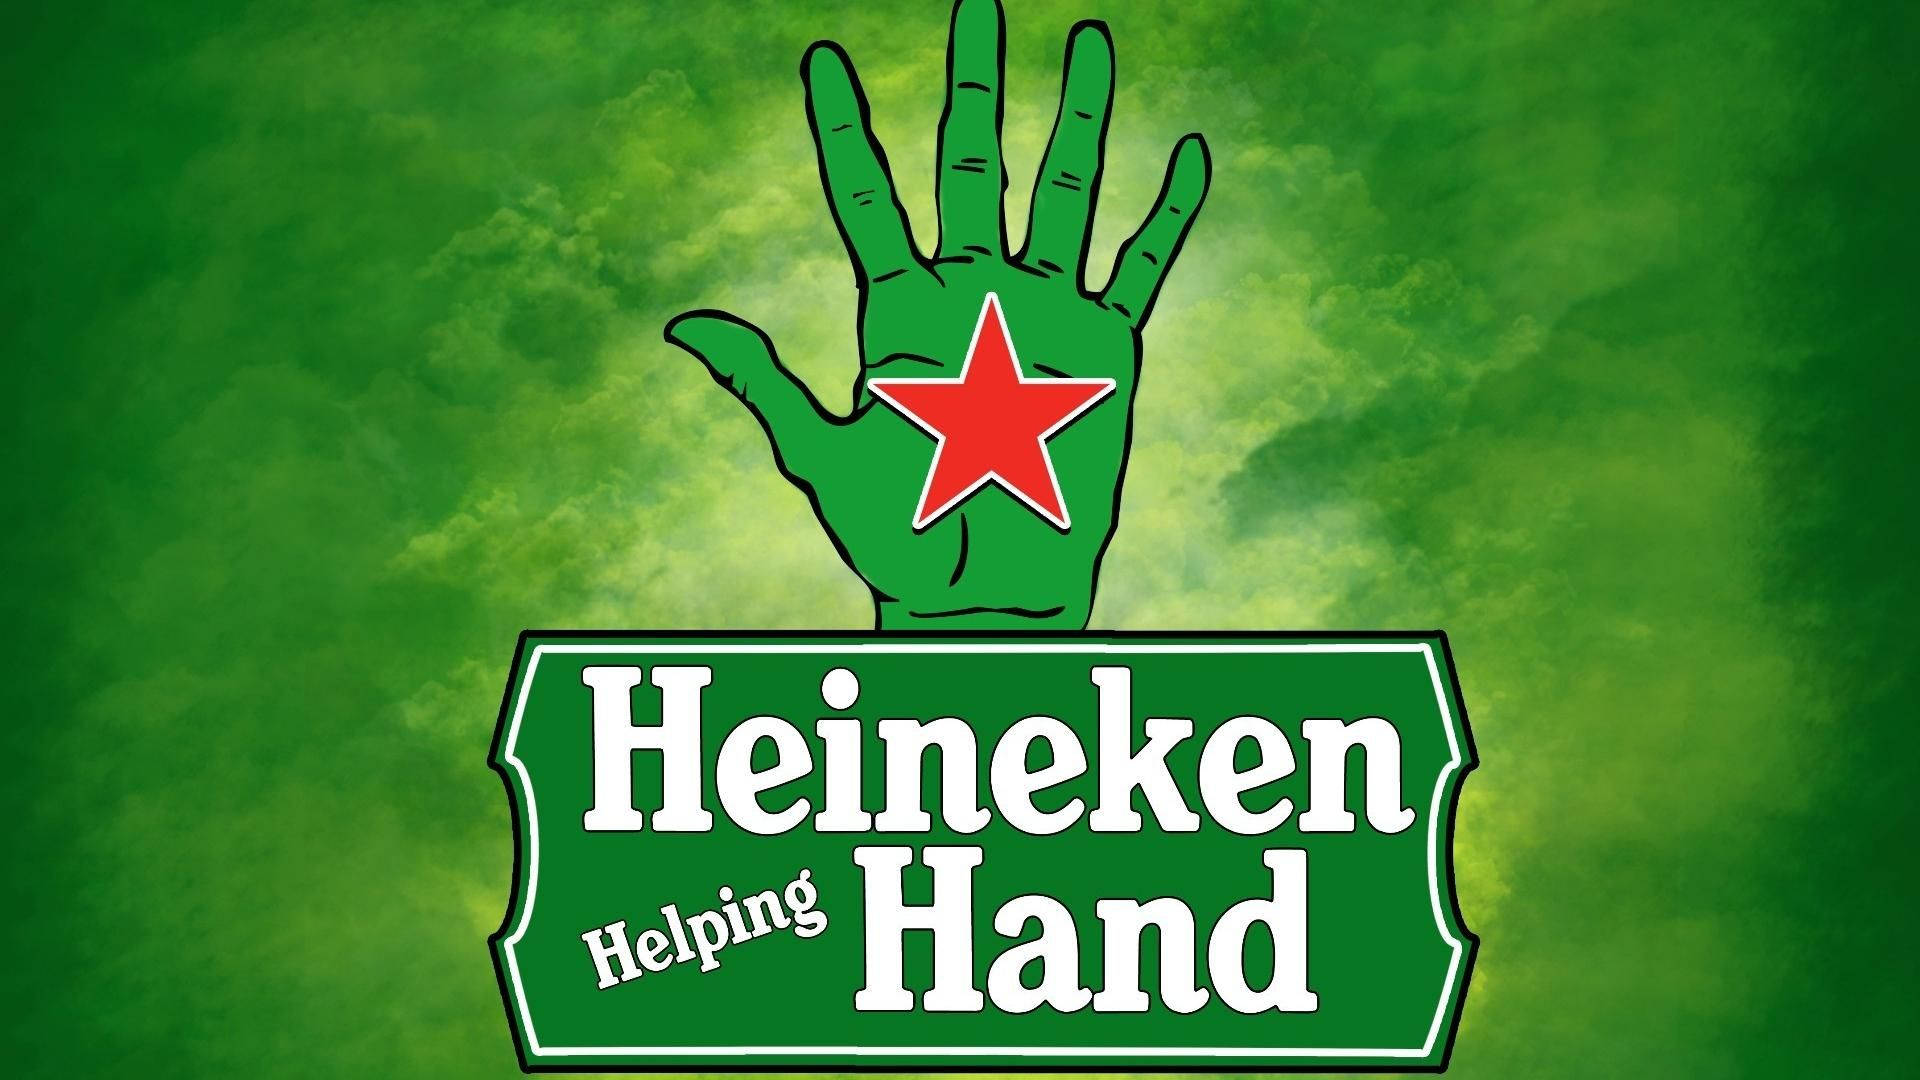 Heineken 1920 X 1080 Wallpaper